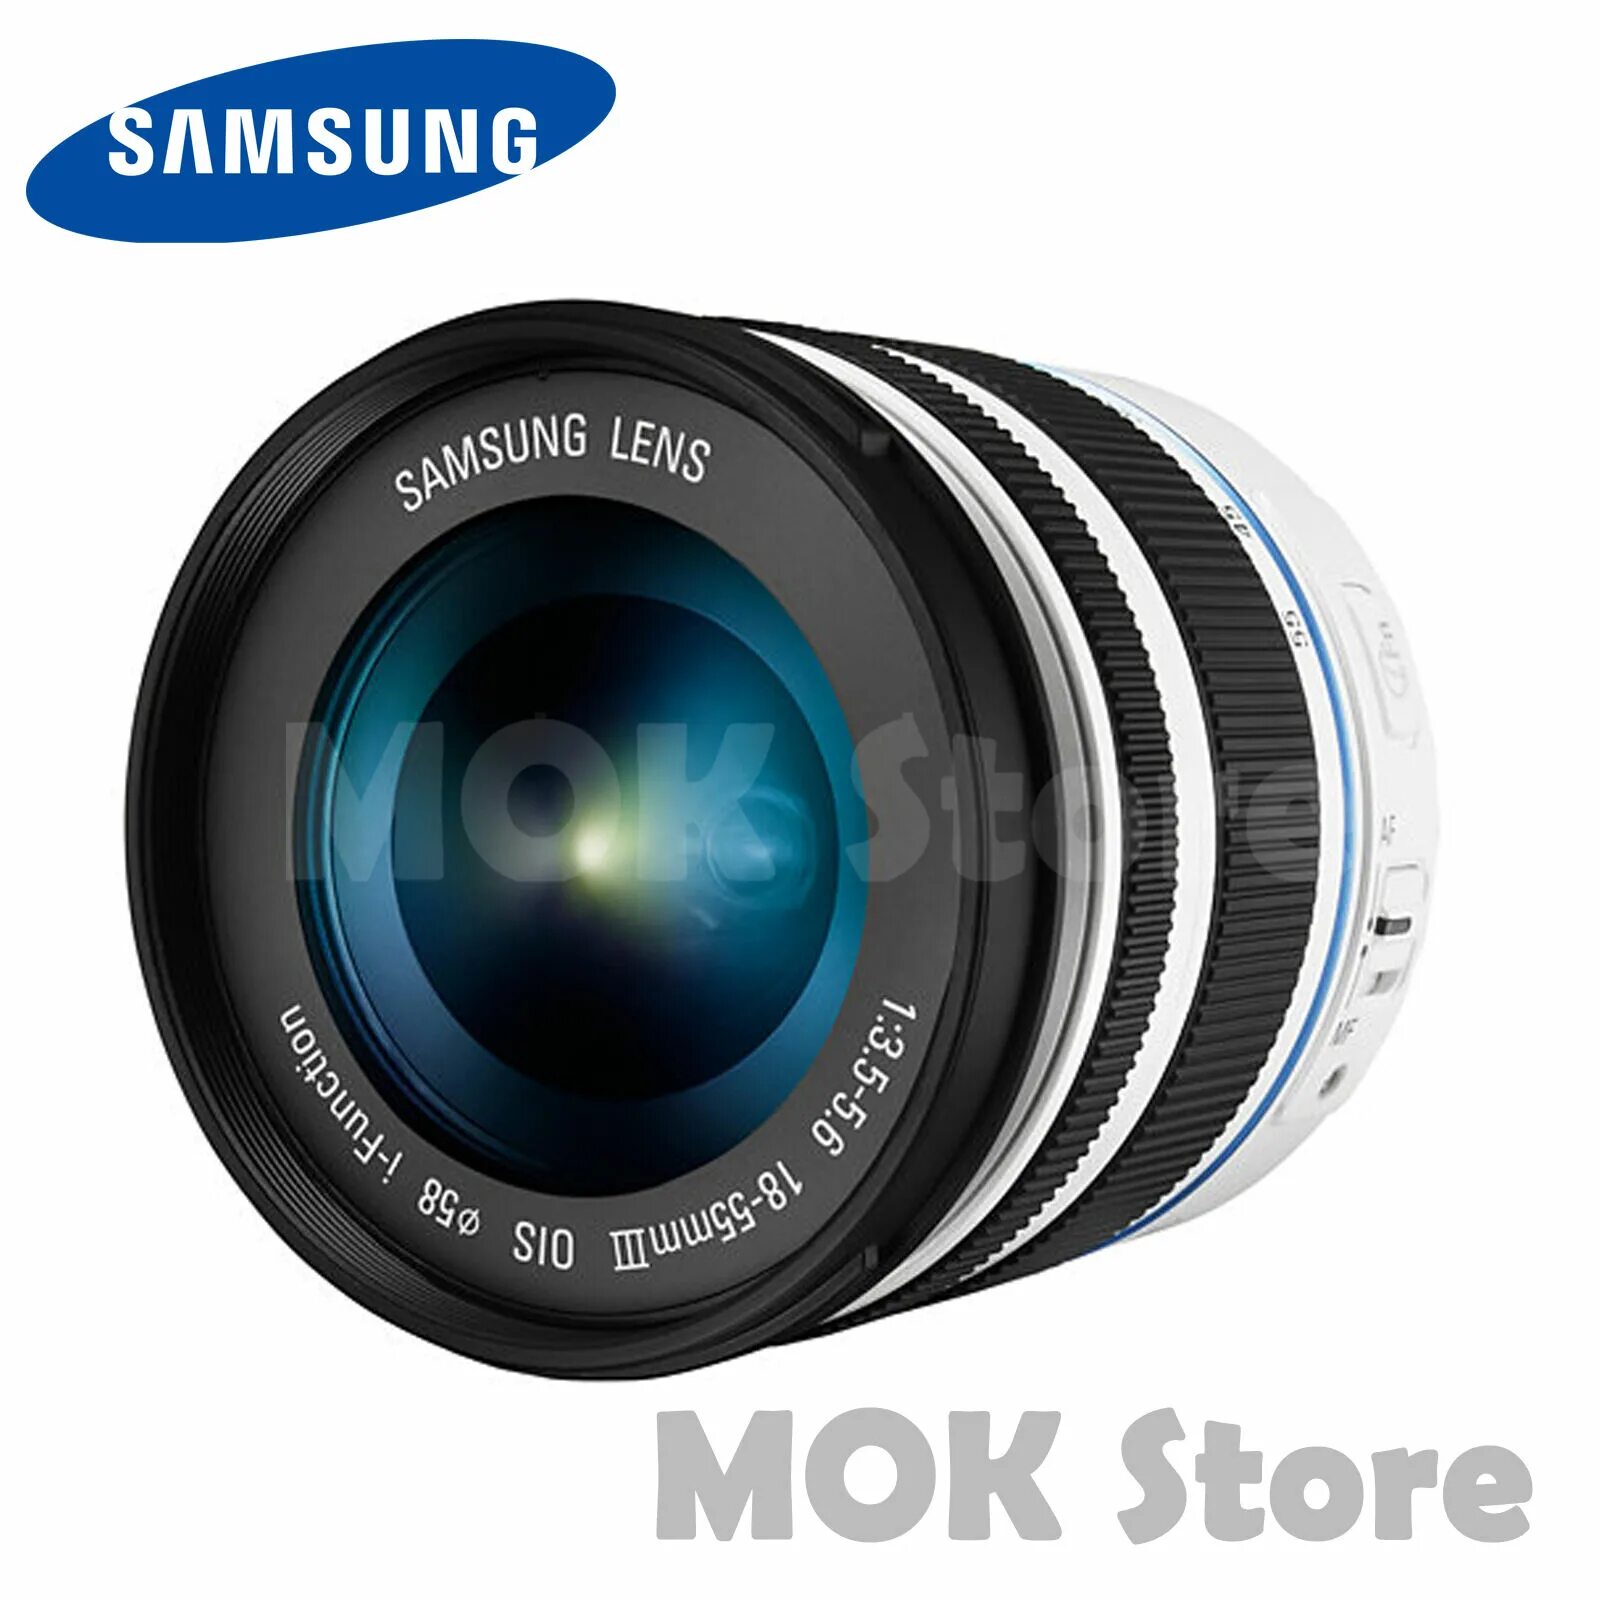 Линза 6 мм. Samsung 18-55 III. Объектив Samsung Lens. Самсунг с объективом. Объектив 30 мм NX.